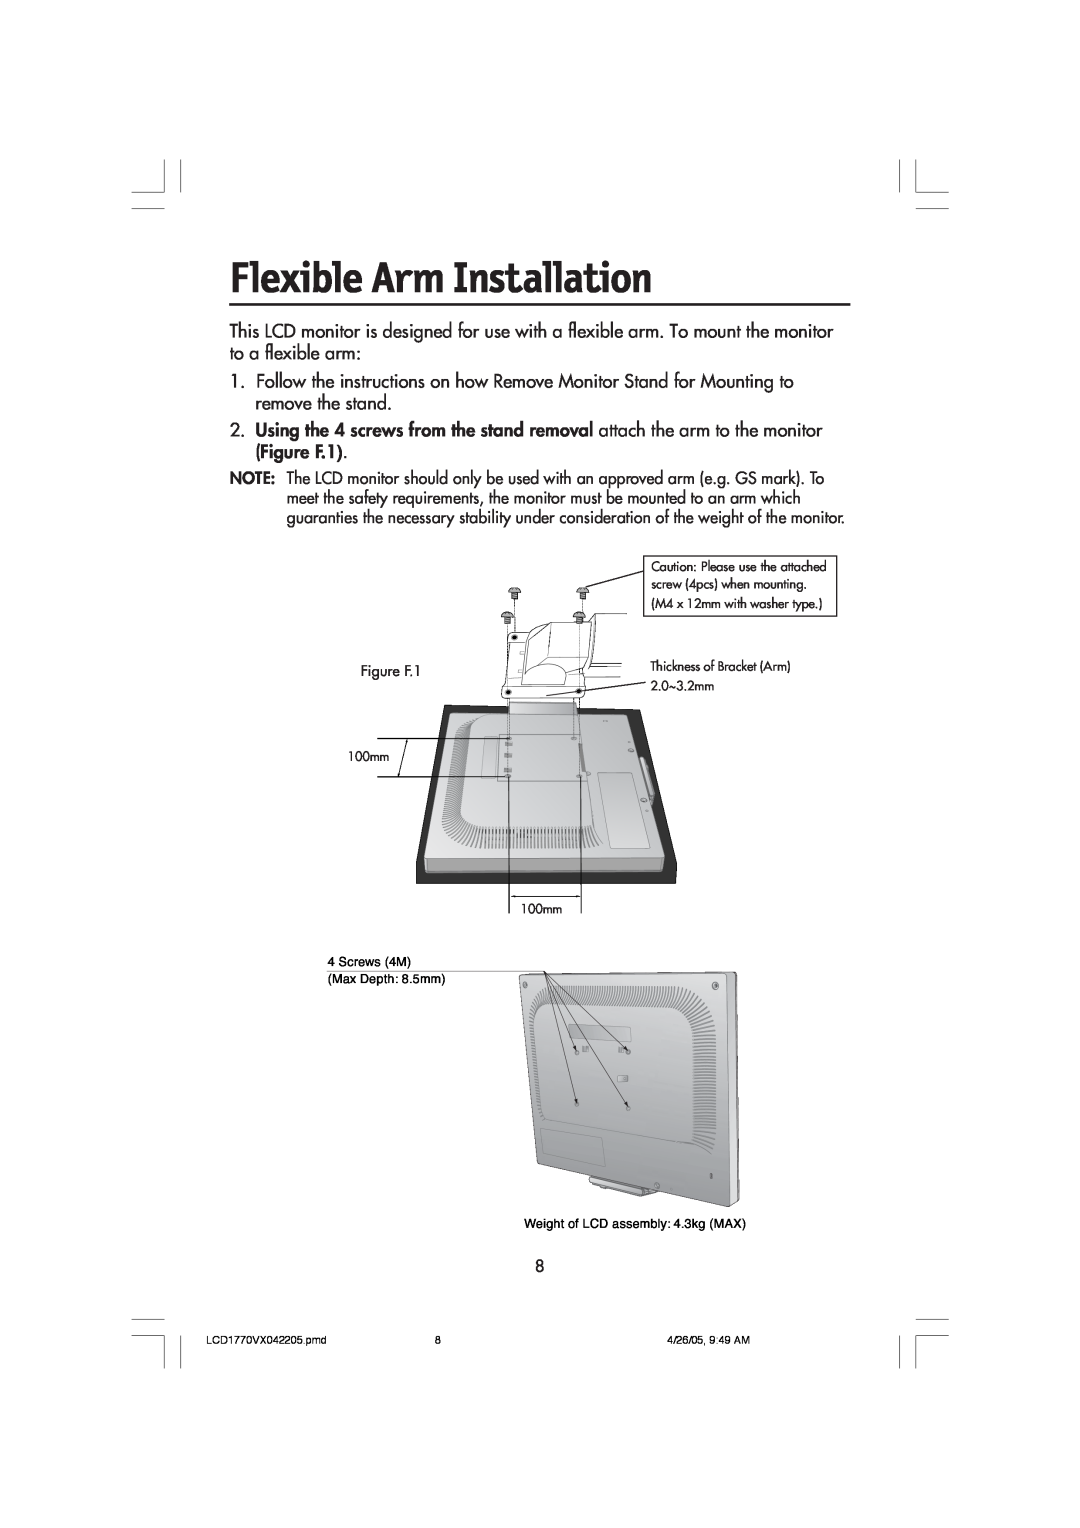 NEC LCD1770VX user manual Flexible Arm Installation 